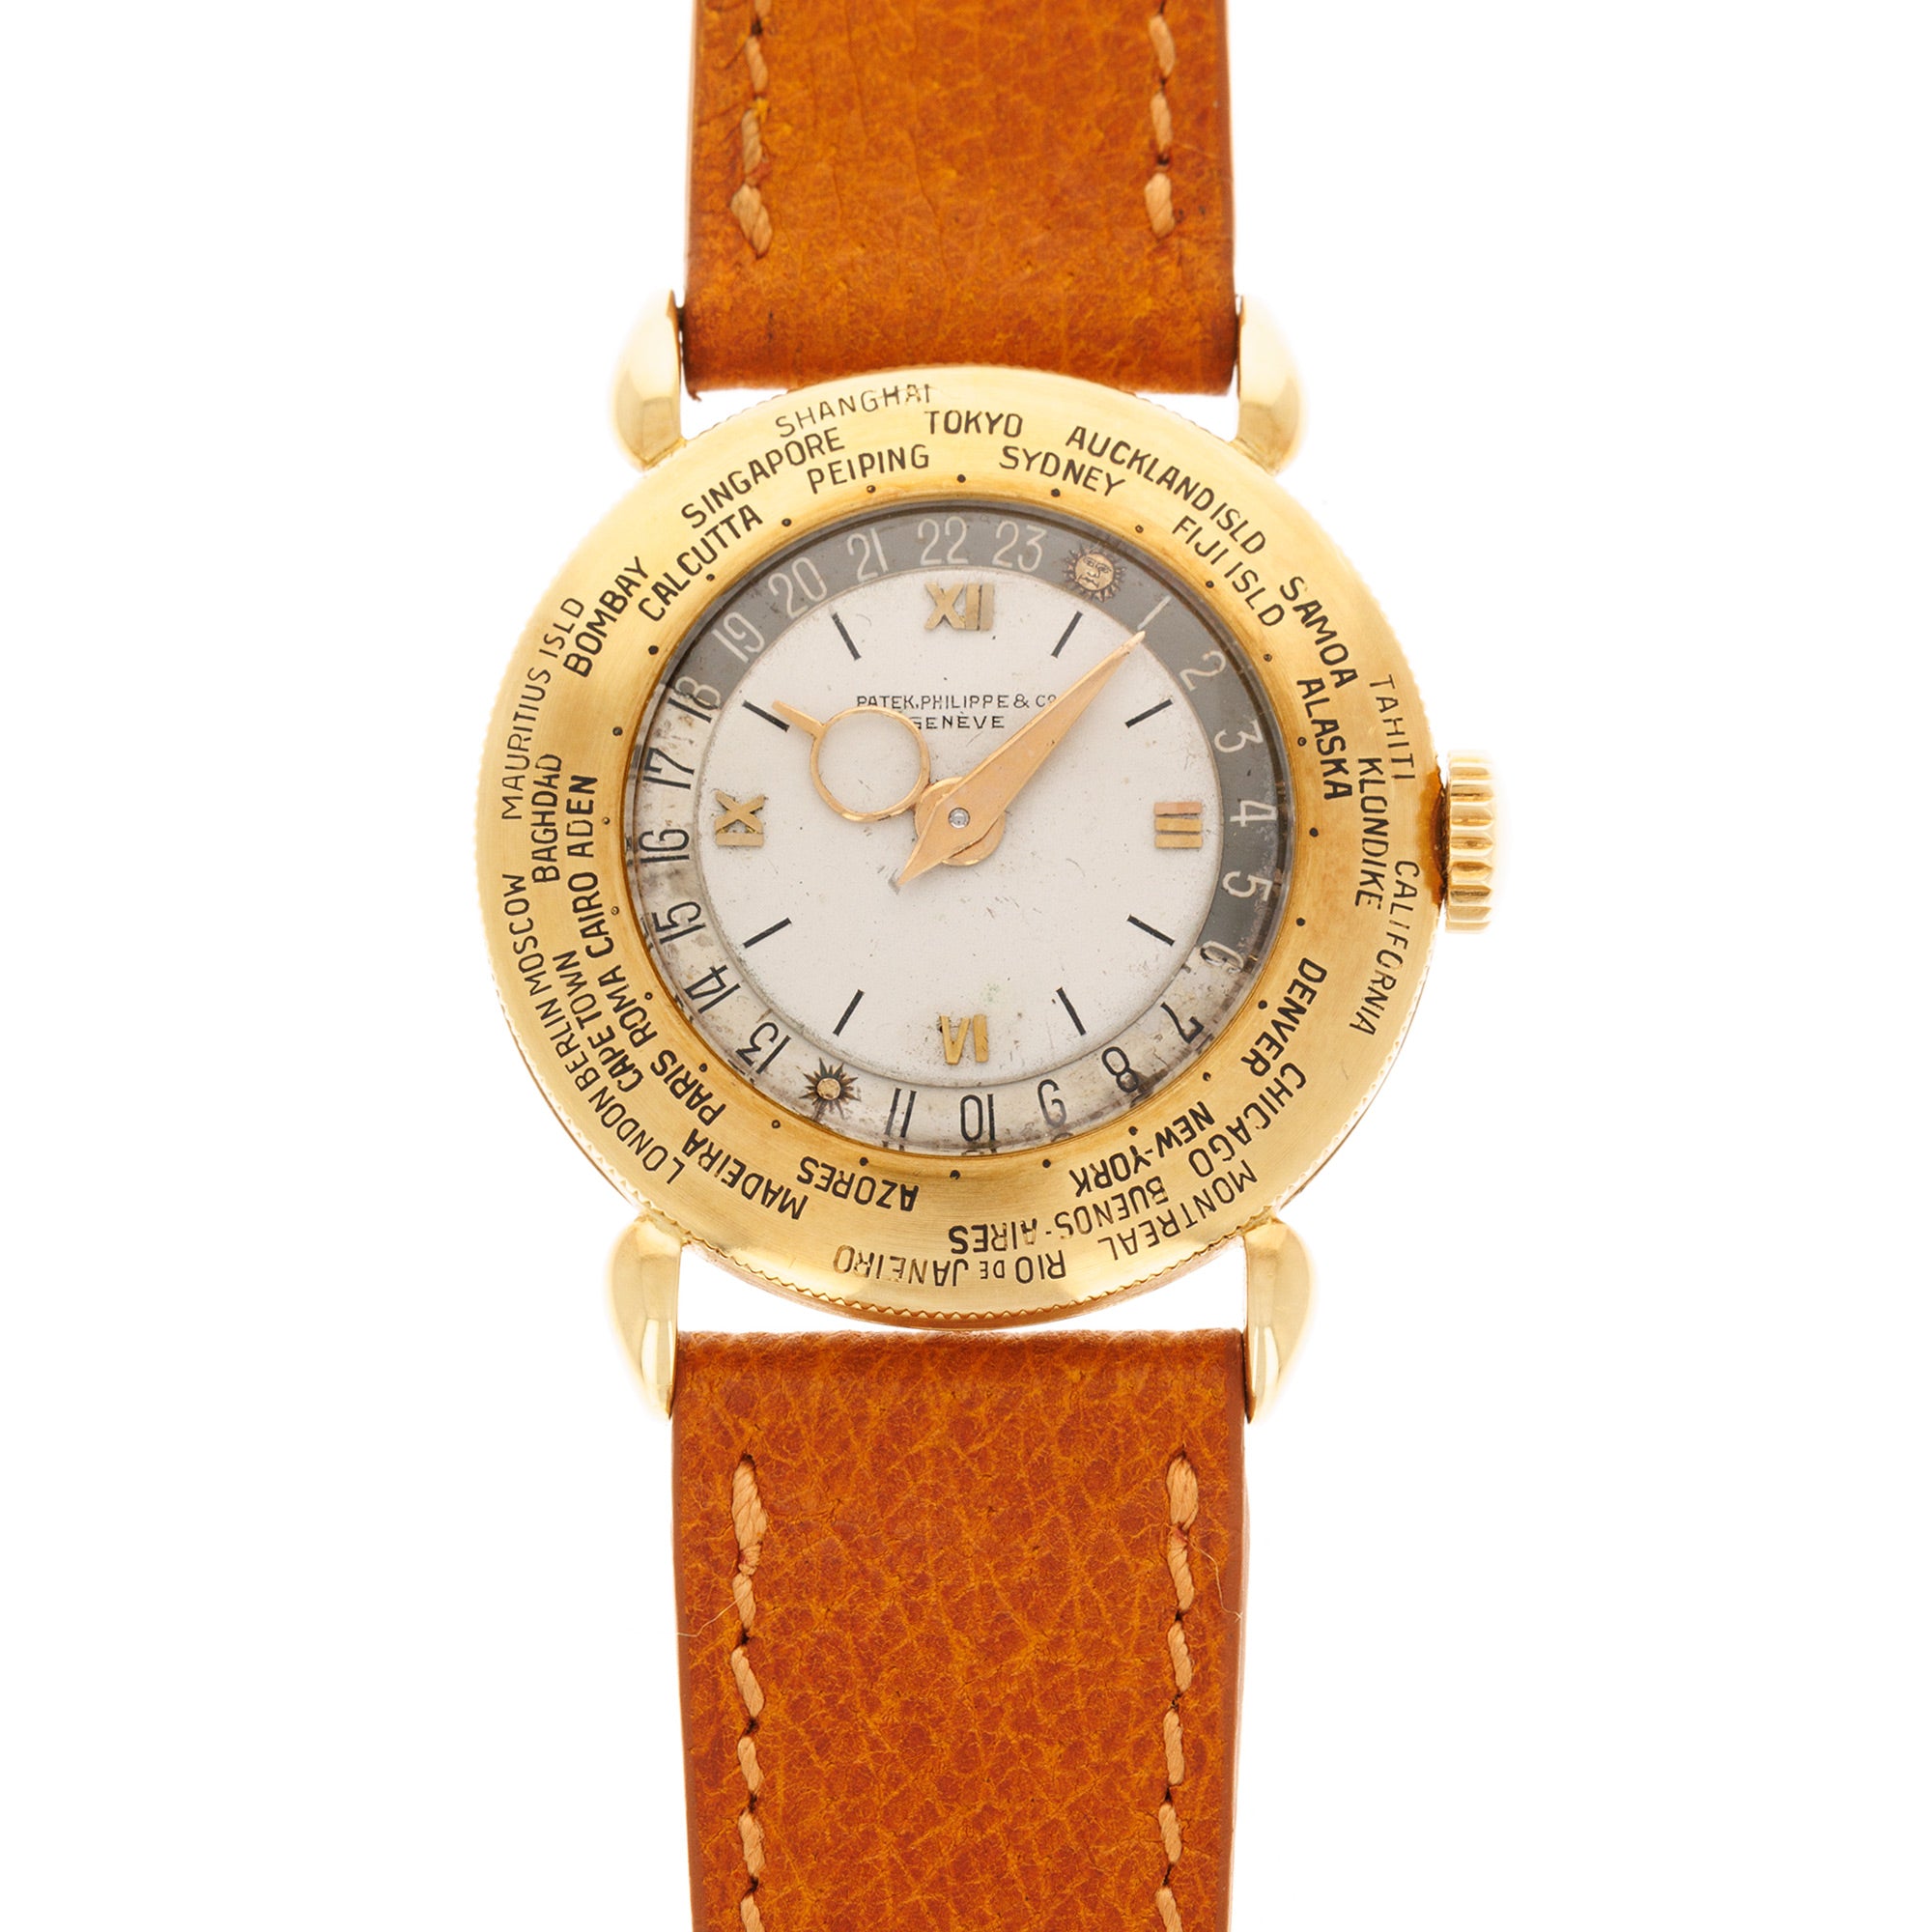 Patek Philippe - Patek Philippe Yellow Gold World Time Watch Ref. 1415 - The Keystone Watches